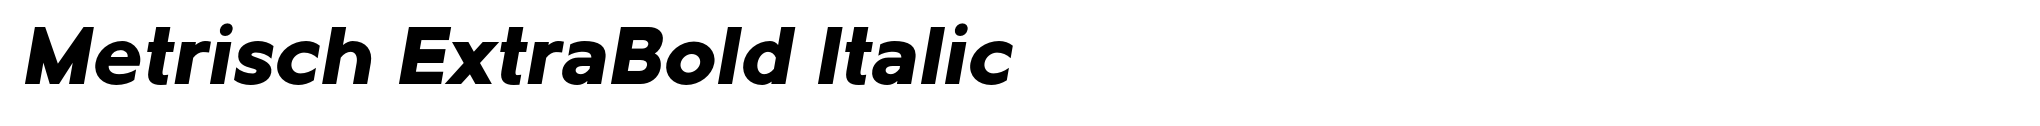 Metrisch ExtraBold Italic image